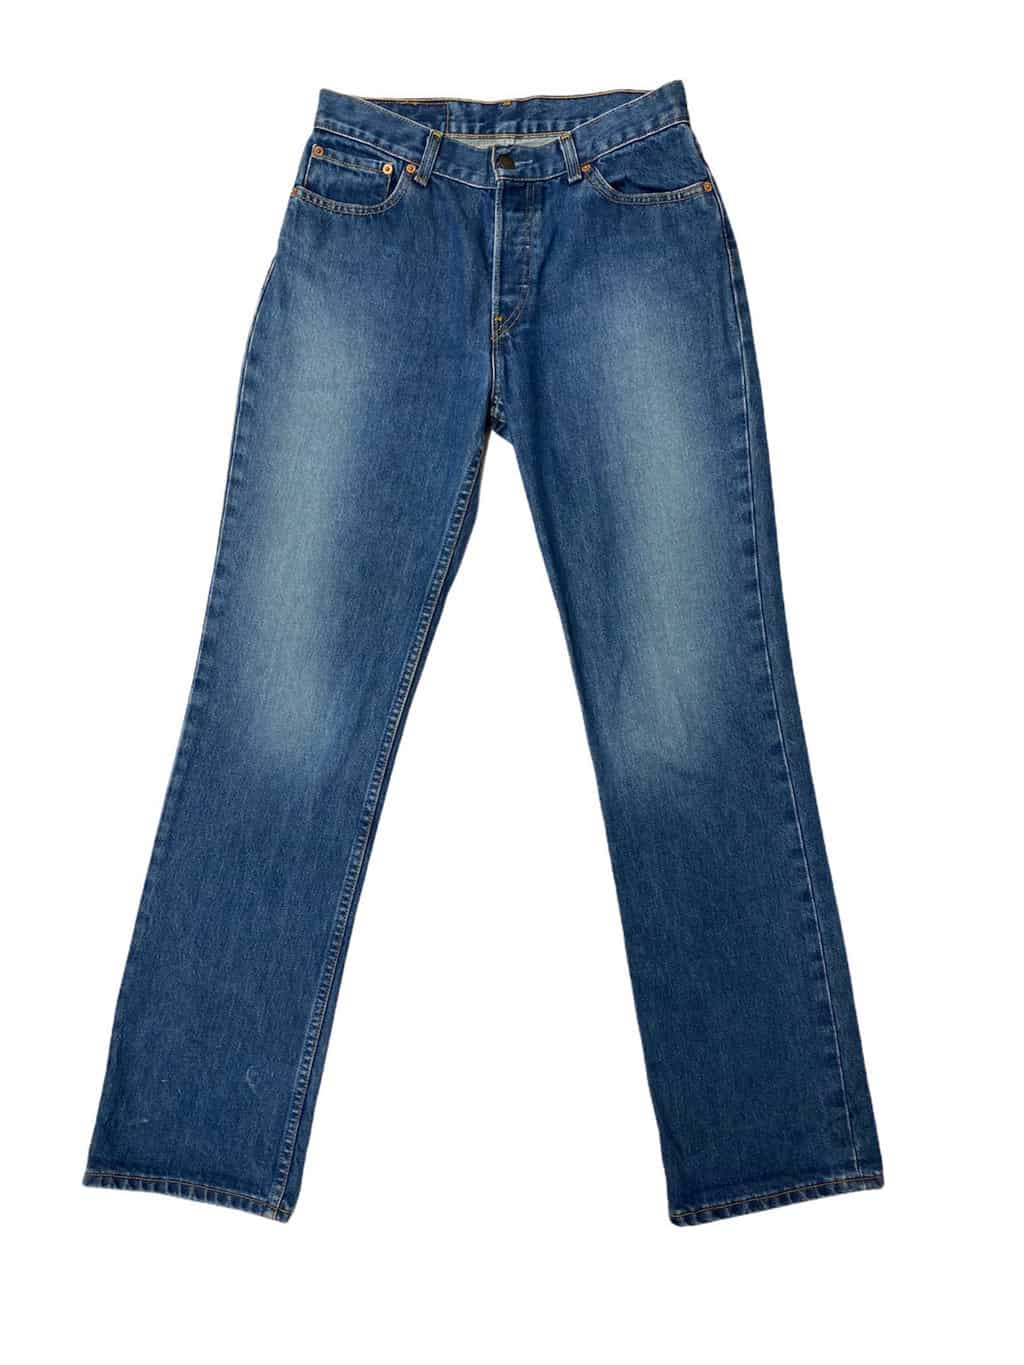 Vintage Levis 575 denim jeans in mid-blue wash, straight leg - W30 x ...